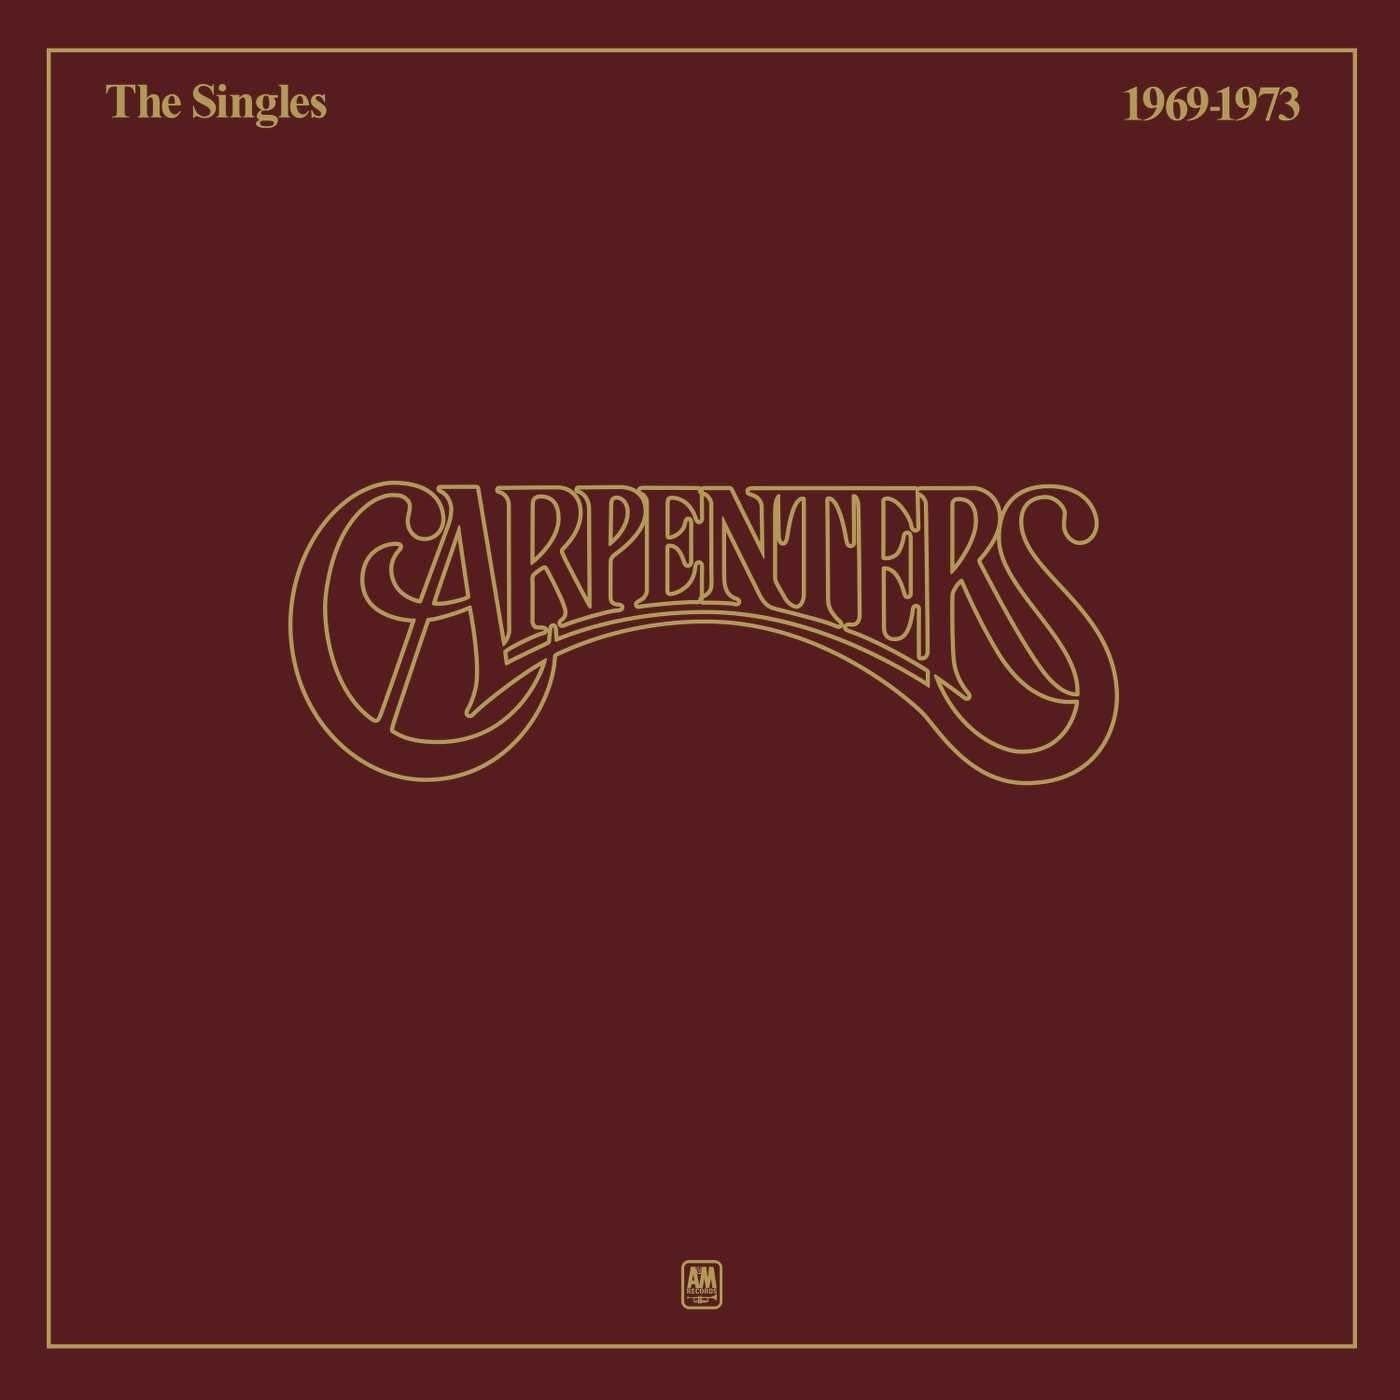 Carpenters – The Singles 1969-1973